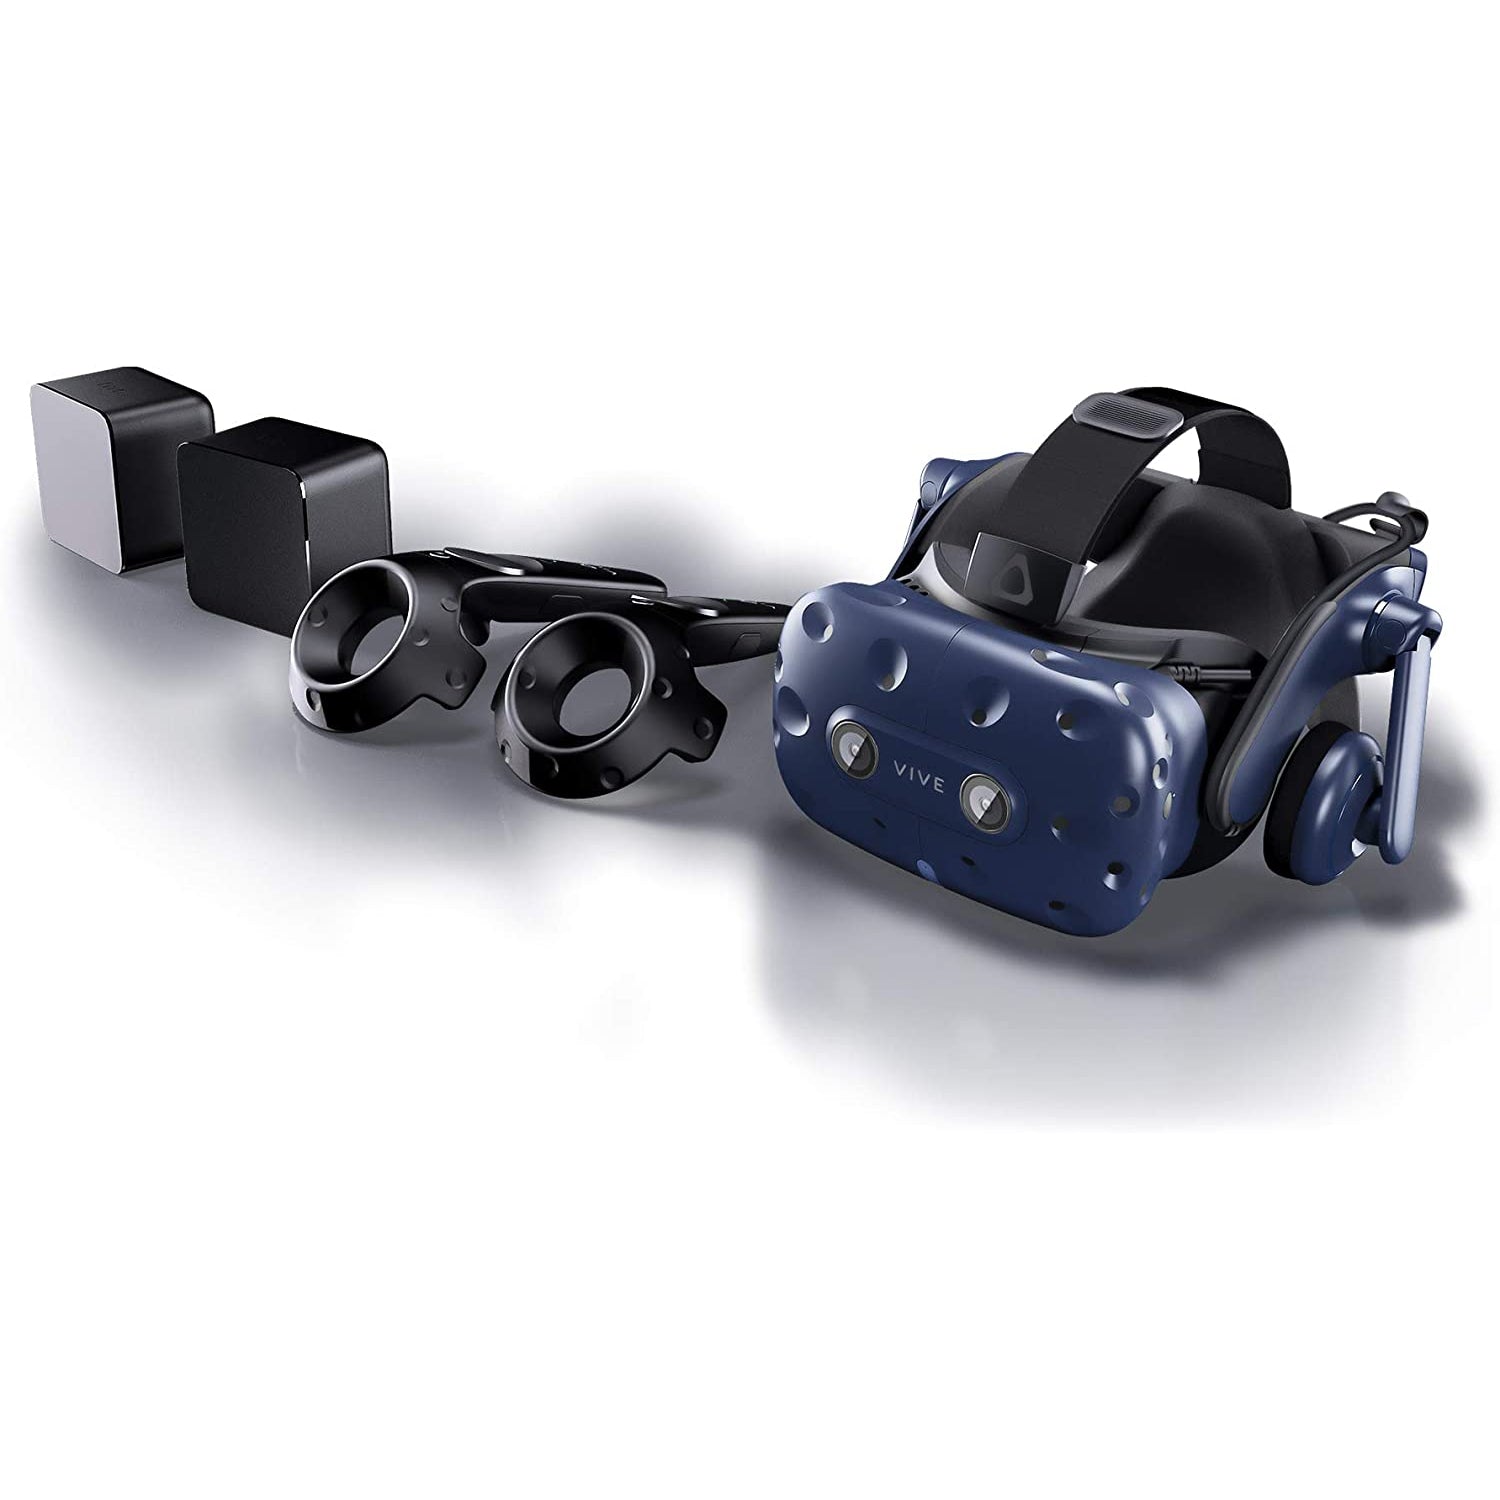 HTC Vive Pro Starter Kit VR Virtual Reality Headset - Blue (99HAPY001-00)